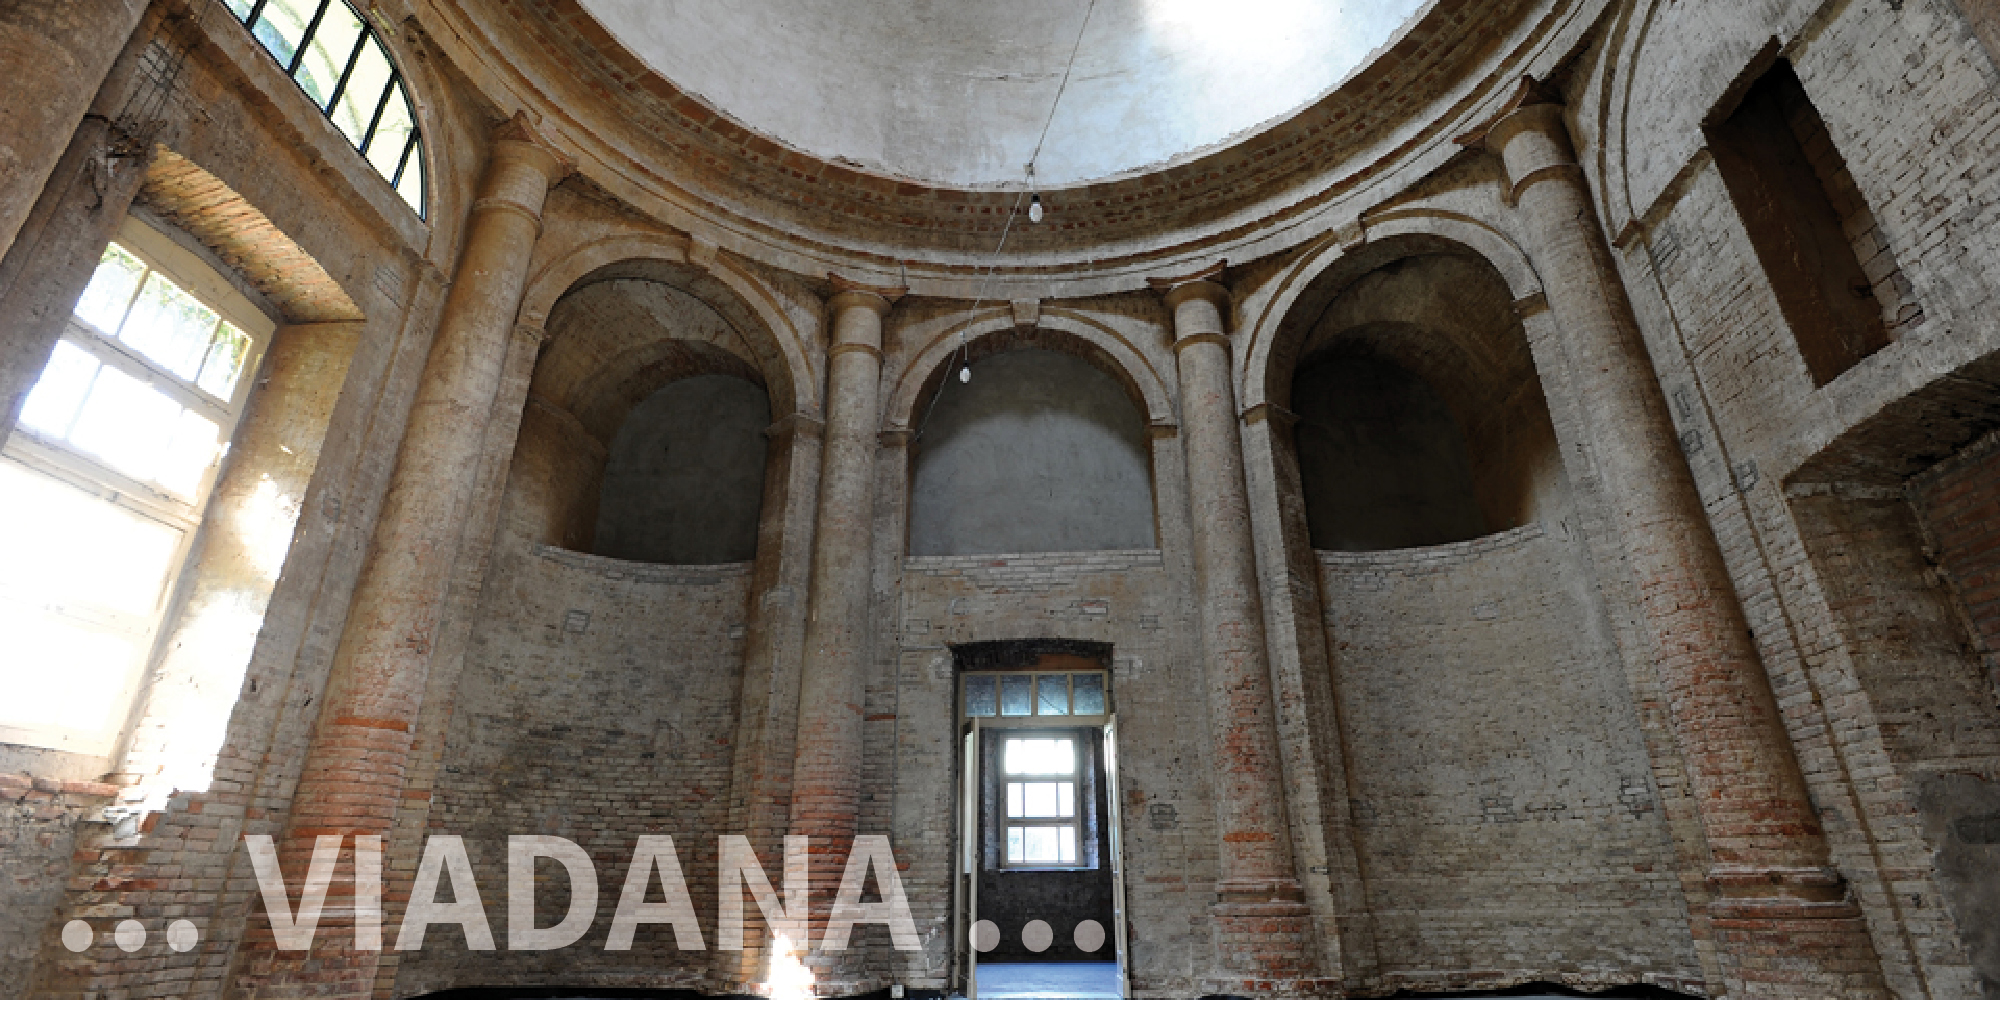 Viadana, interior of the synagogue with a detail of the dome © Alberto Jona Falco